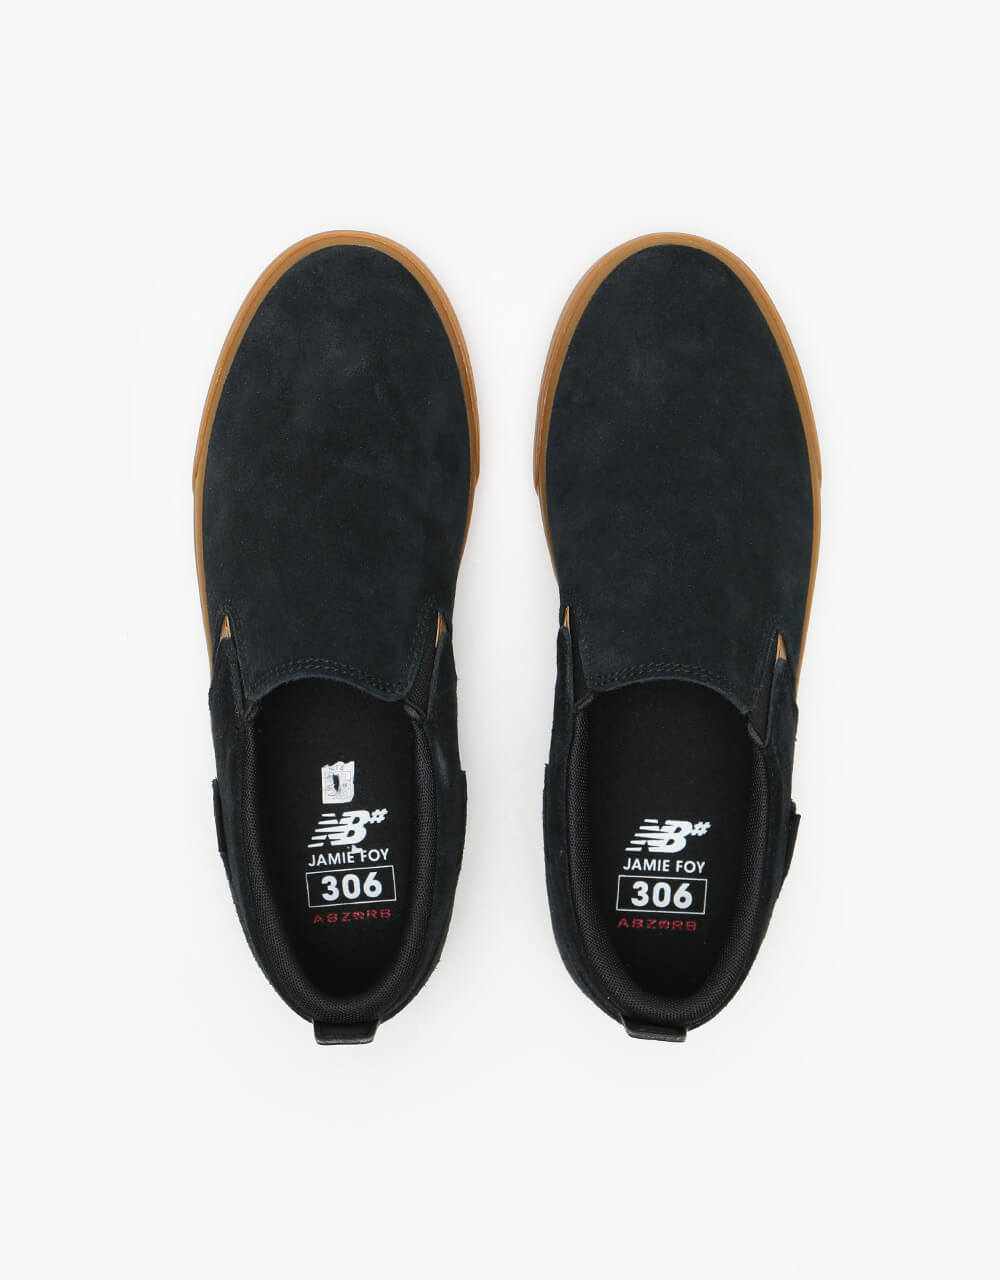 New Balance Numeric 306L Skate Shoes - Black/Gum